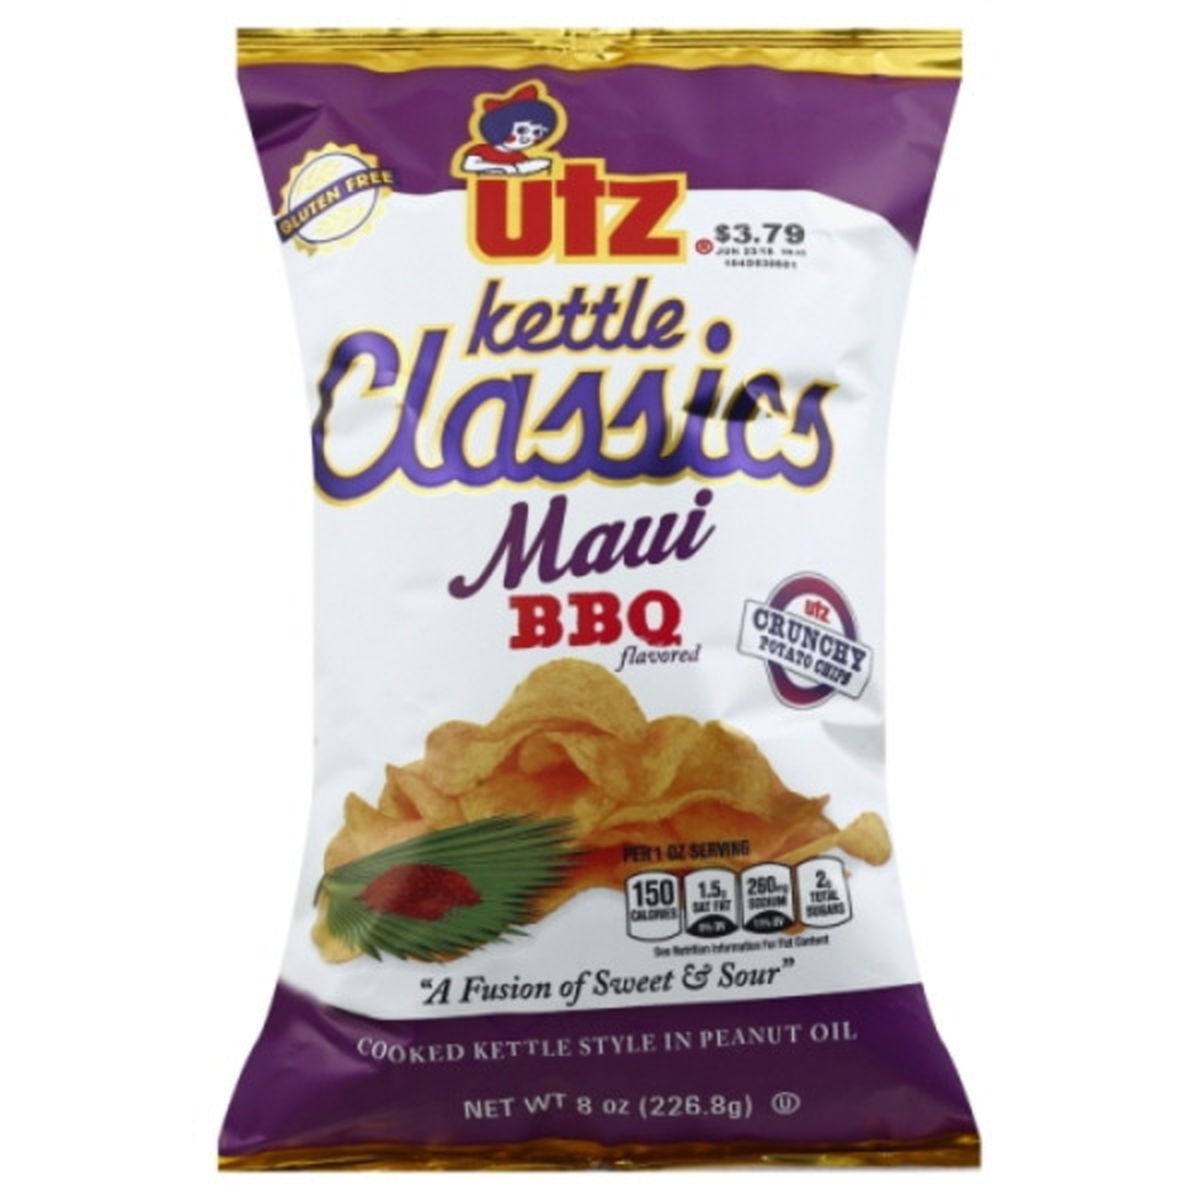 Calories in Utz Kettle Classics Potato Chips, Crunchy, Maui BBQ Flavored